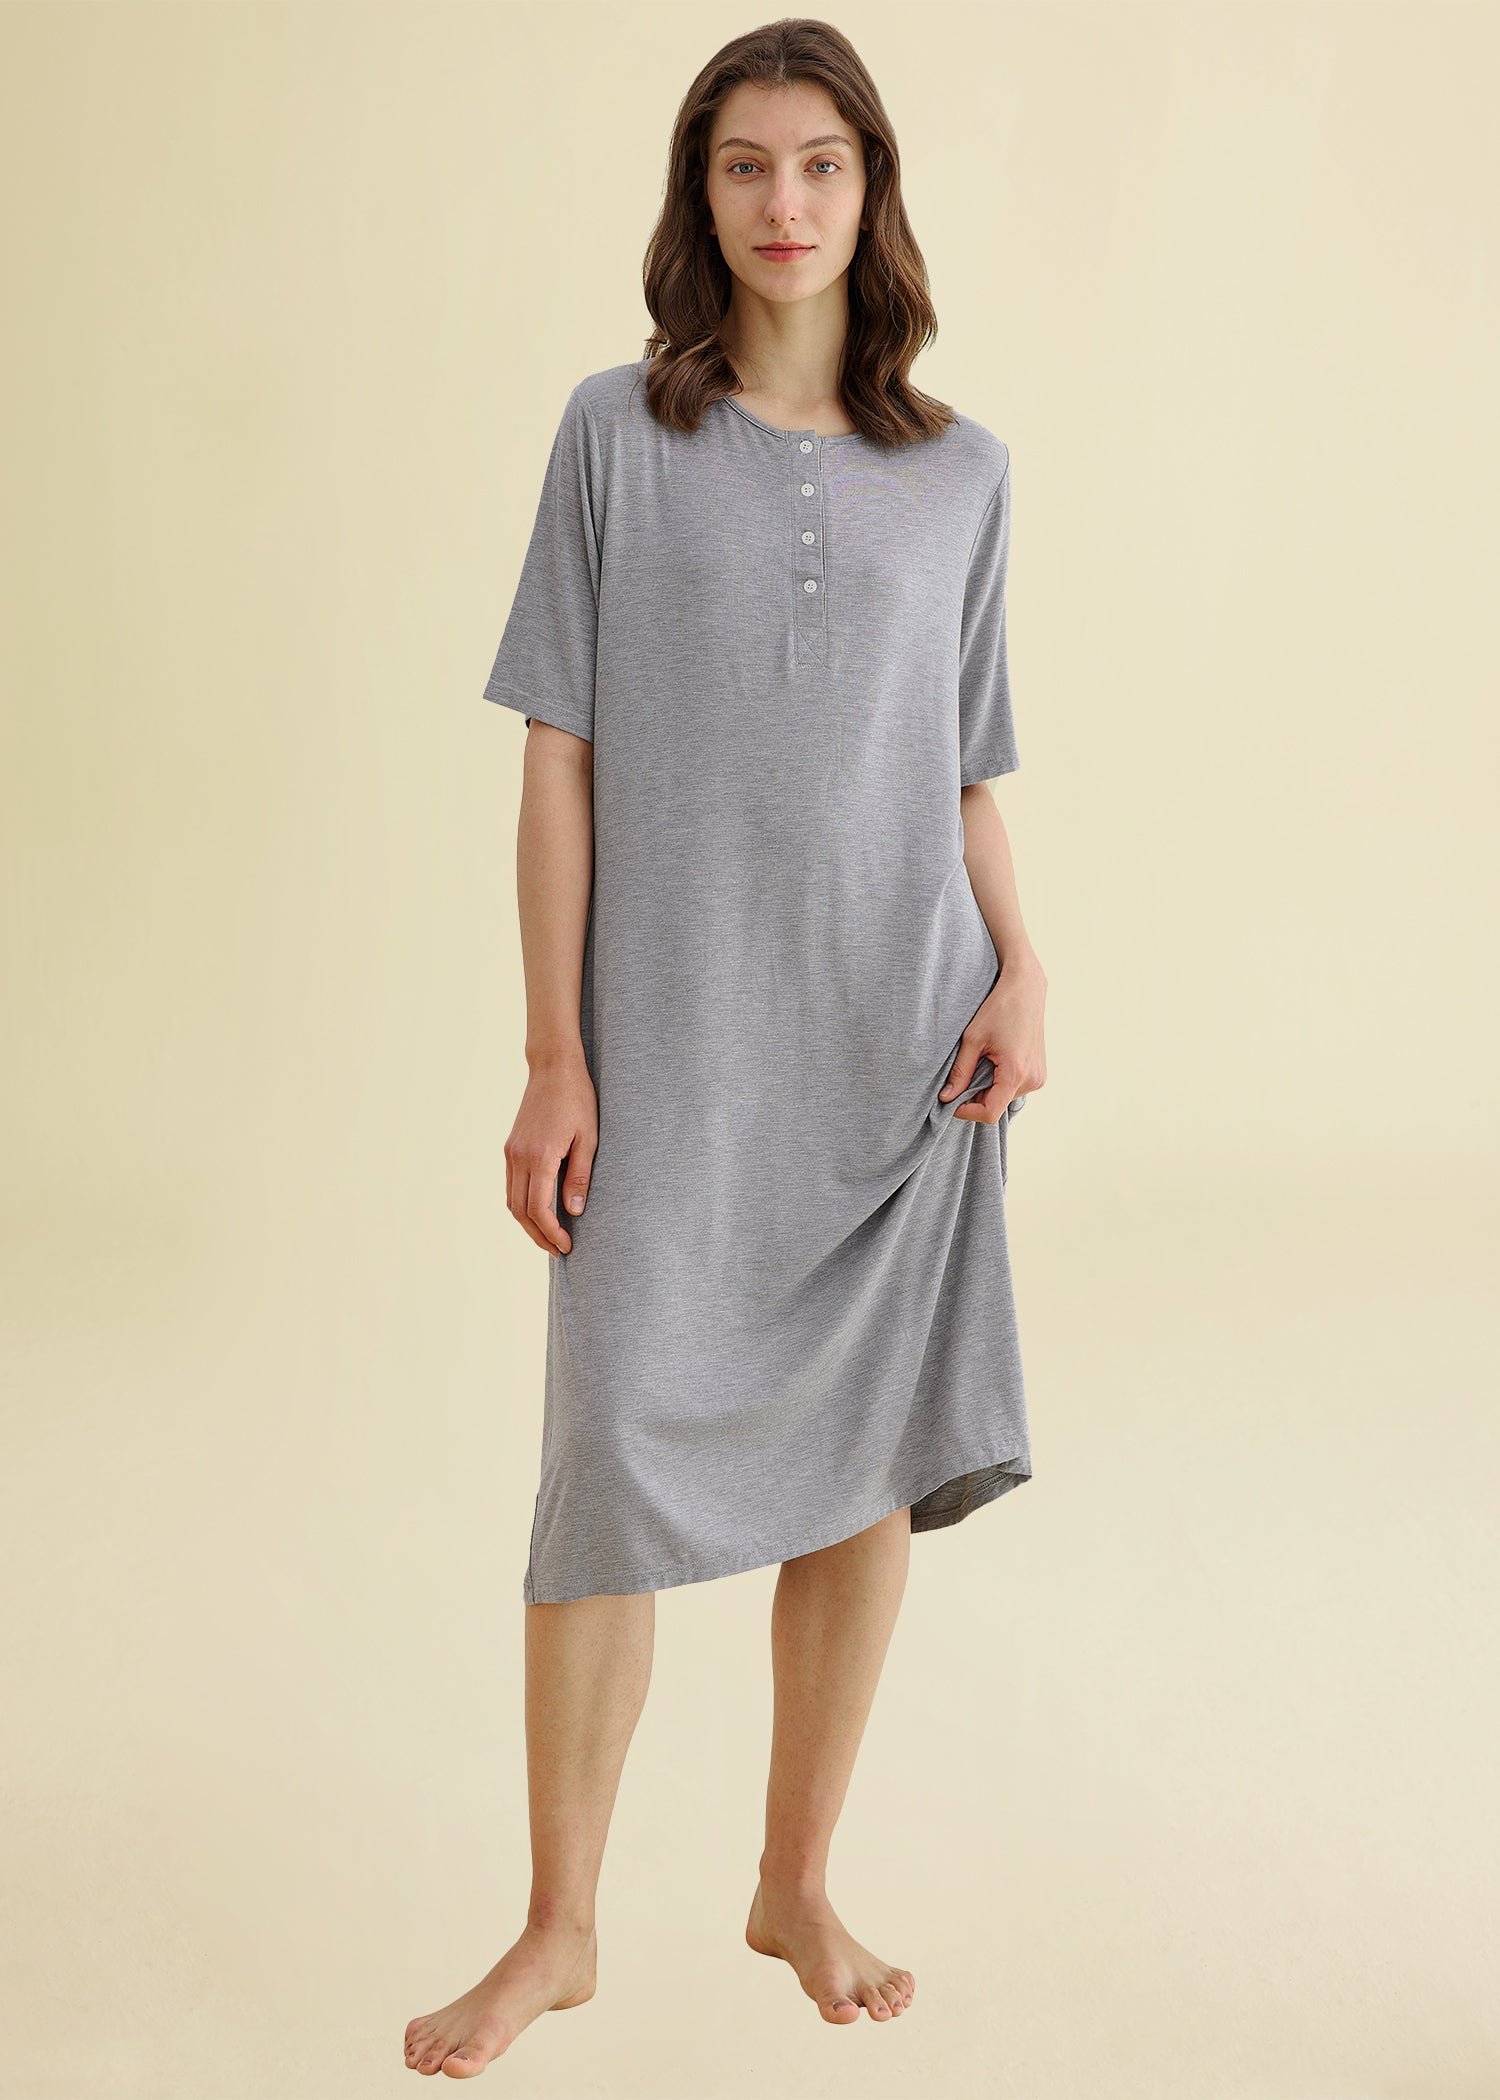 Henley Nightgown, Sleepwear